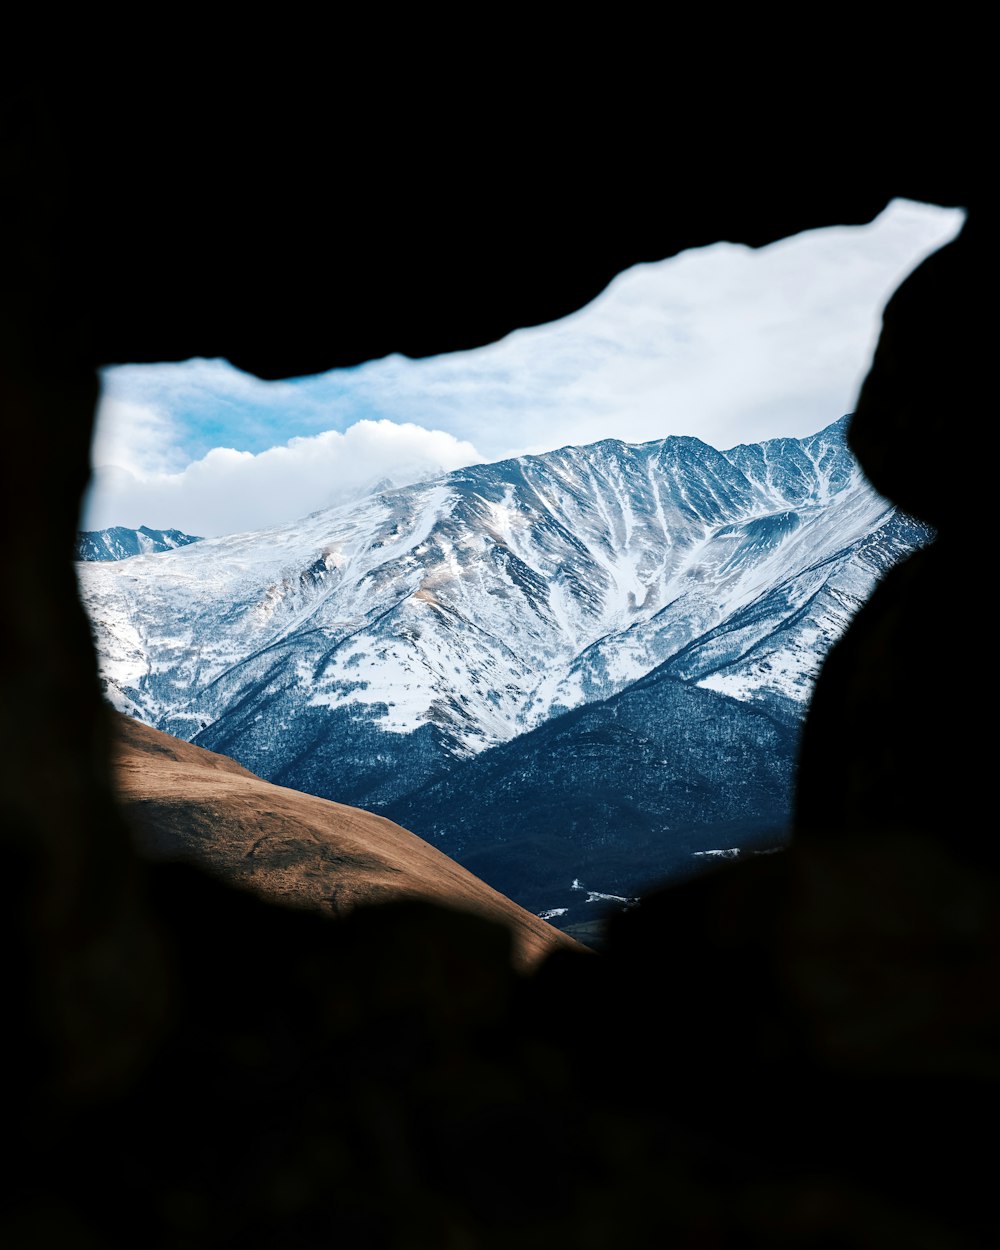 a view of a mountain range through a hole in a rock